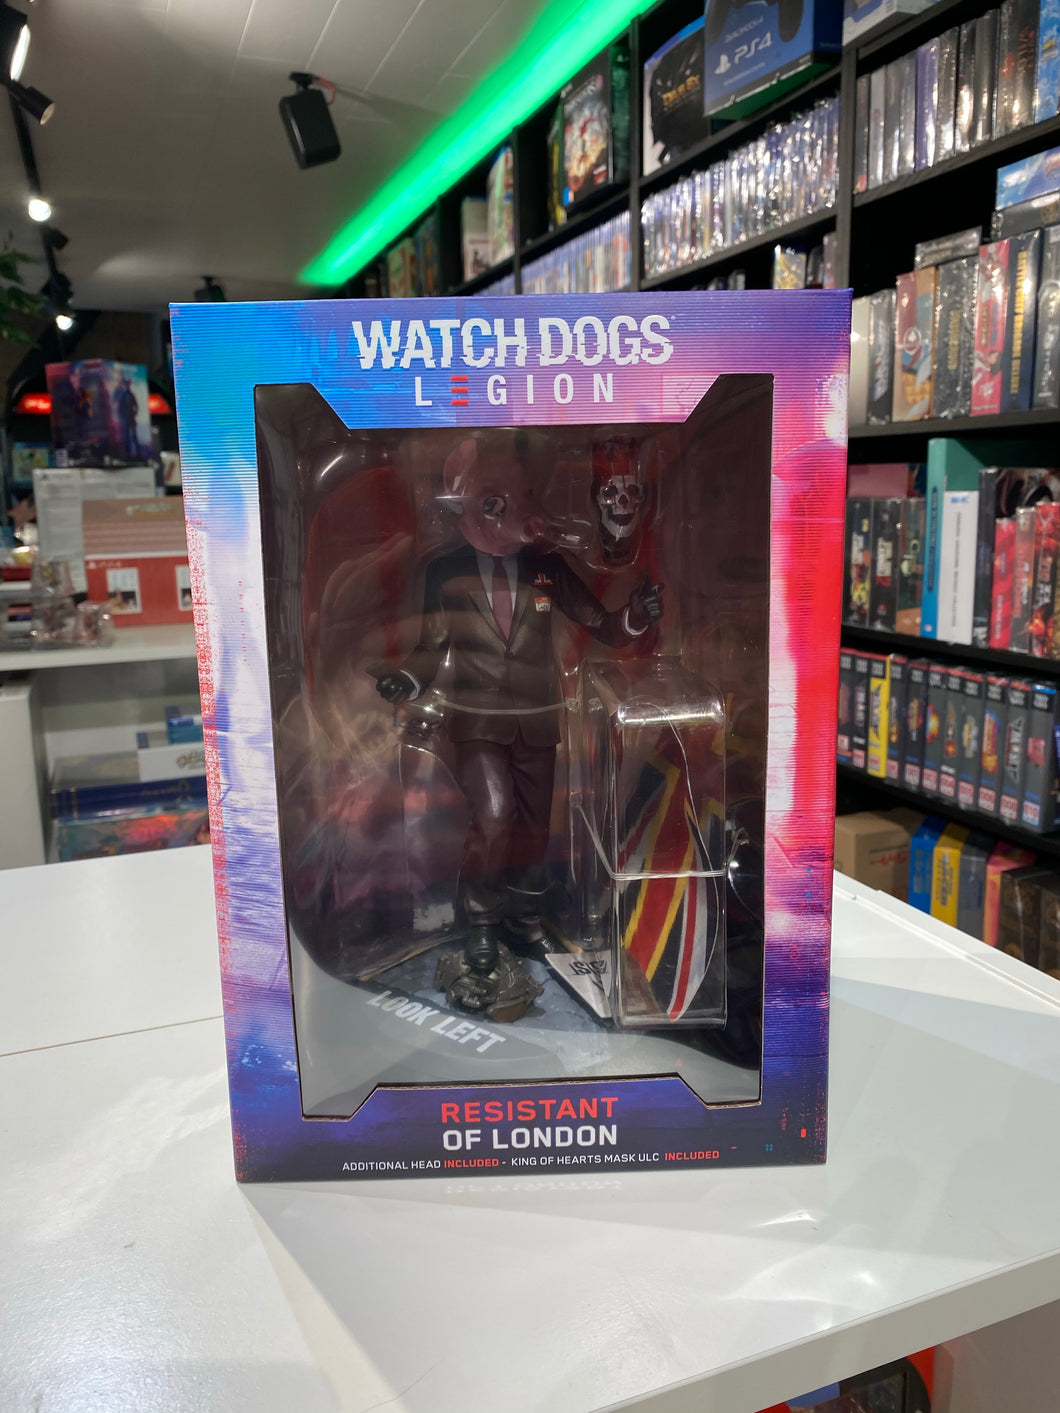 Watch dogs legion / Resistant of London